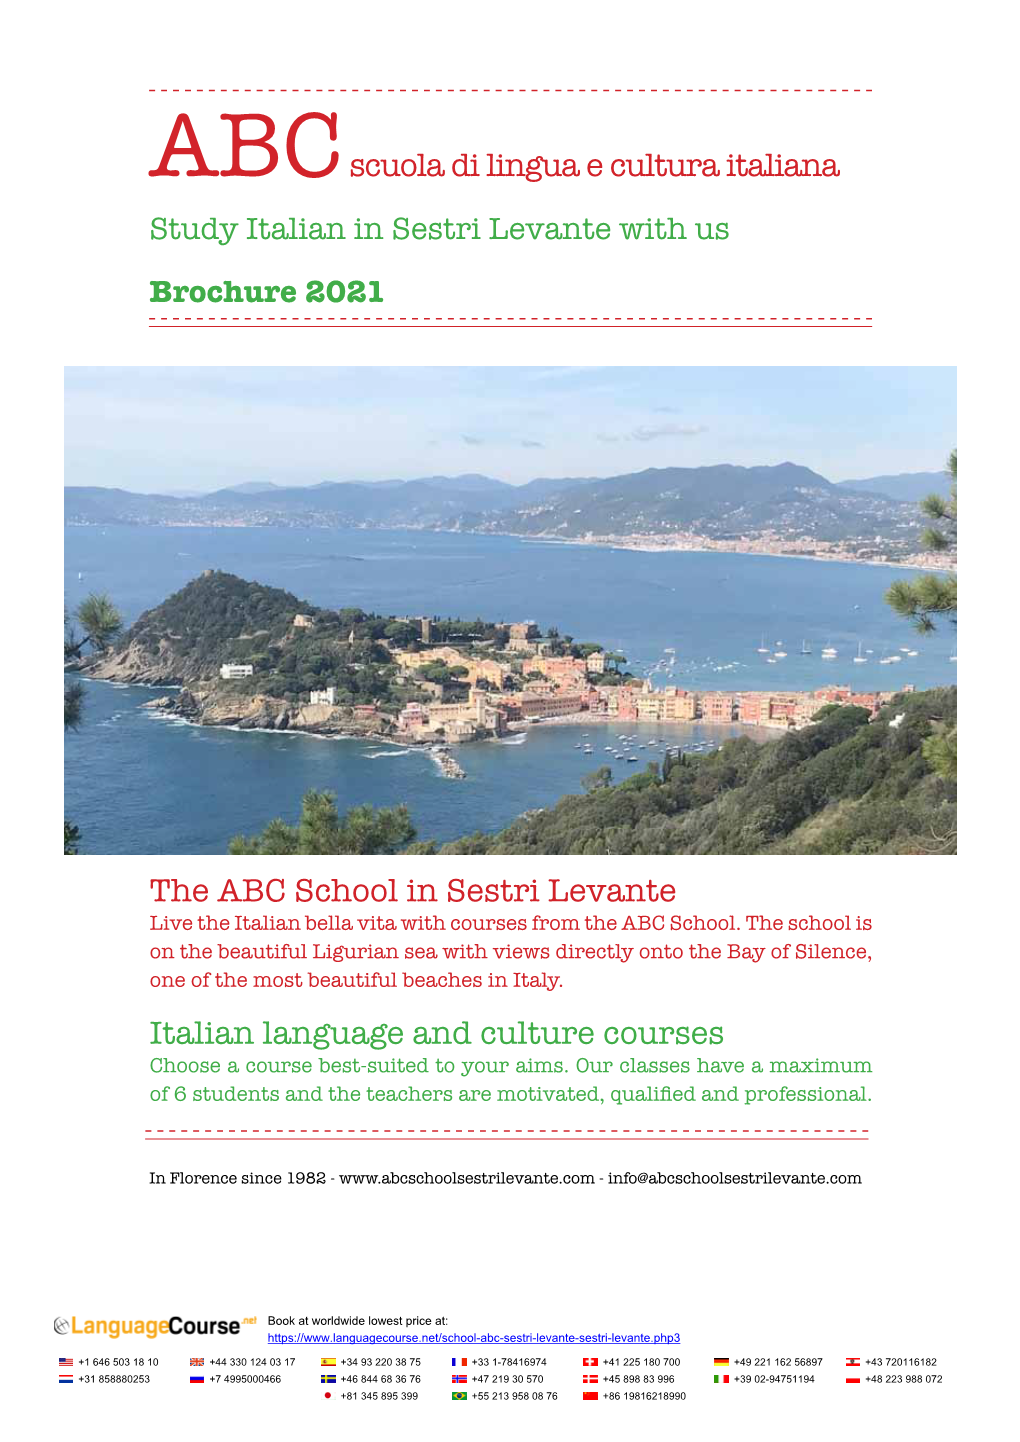 ABC Sestri Levante Brochure 2021